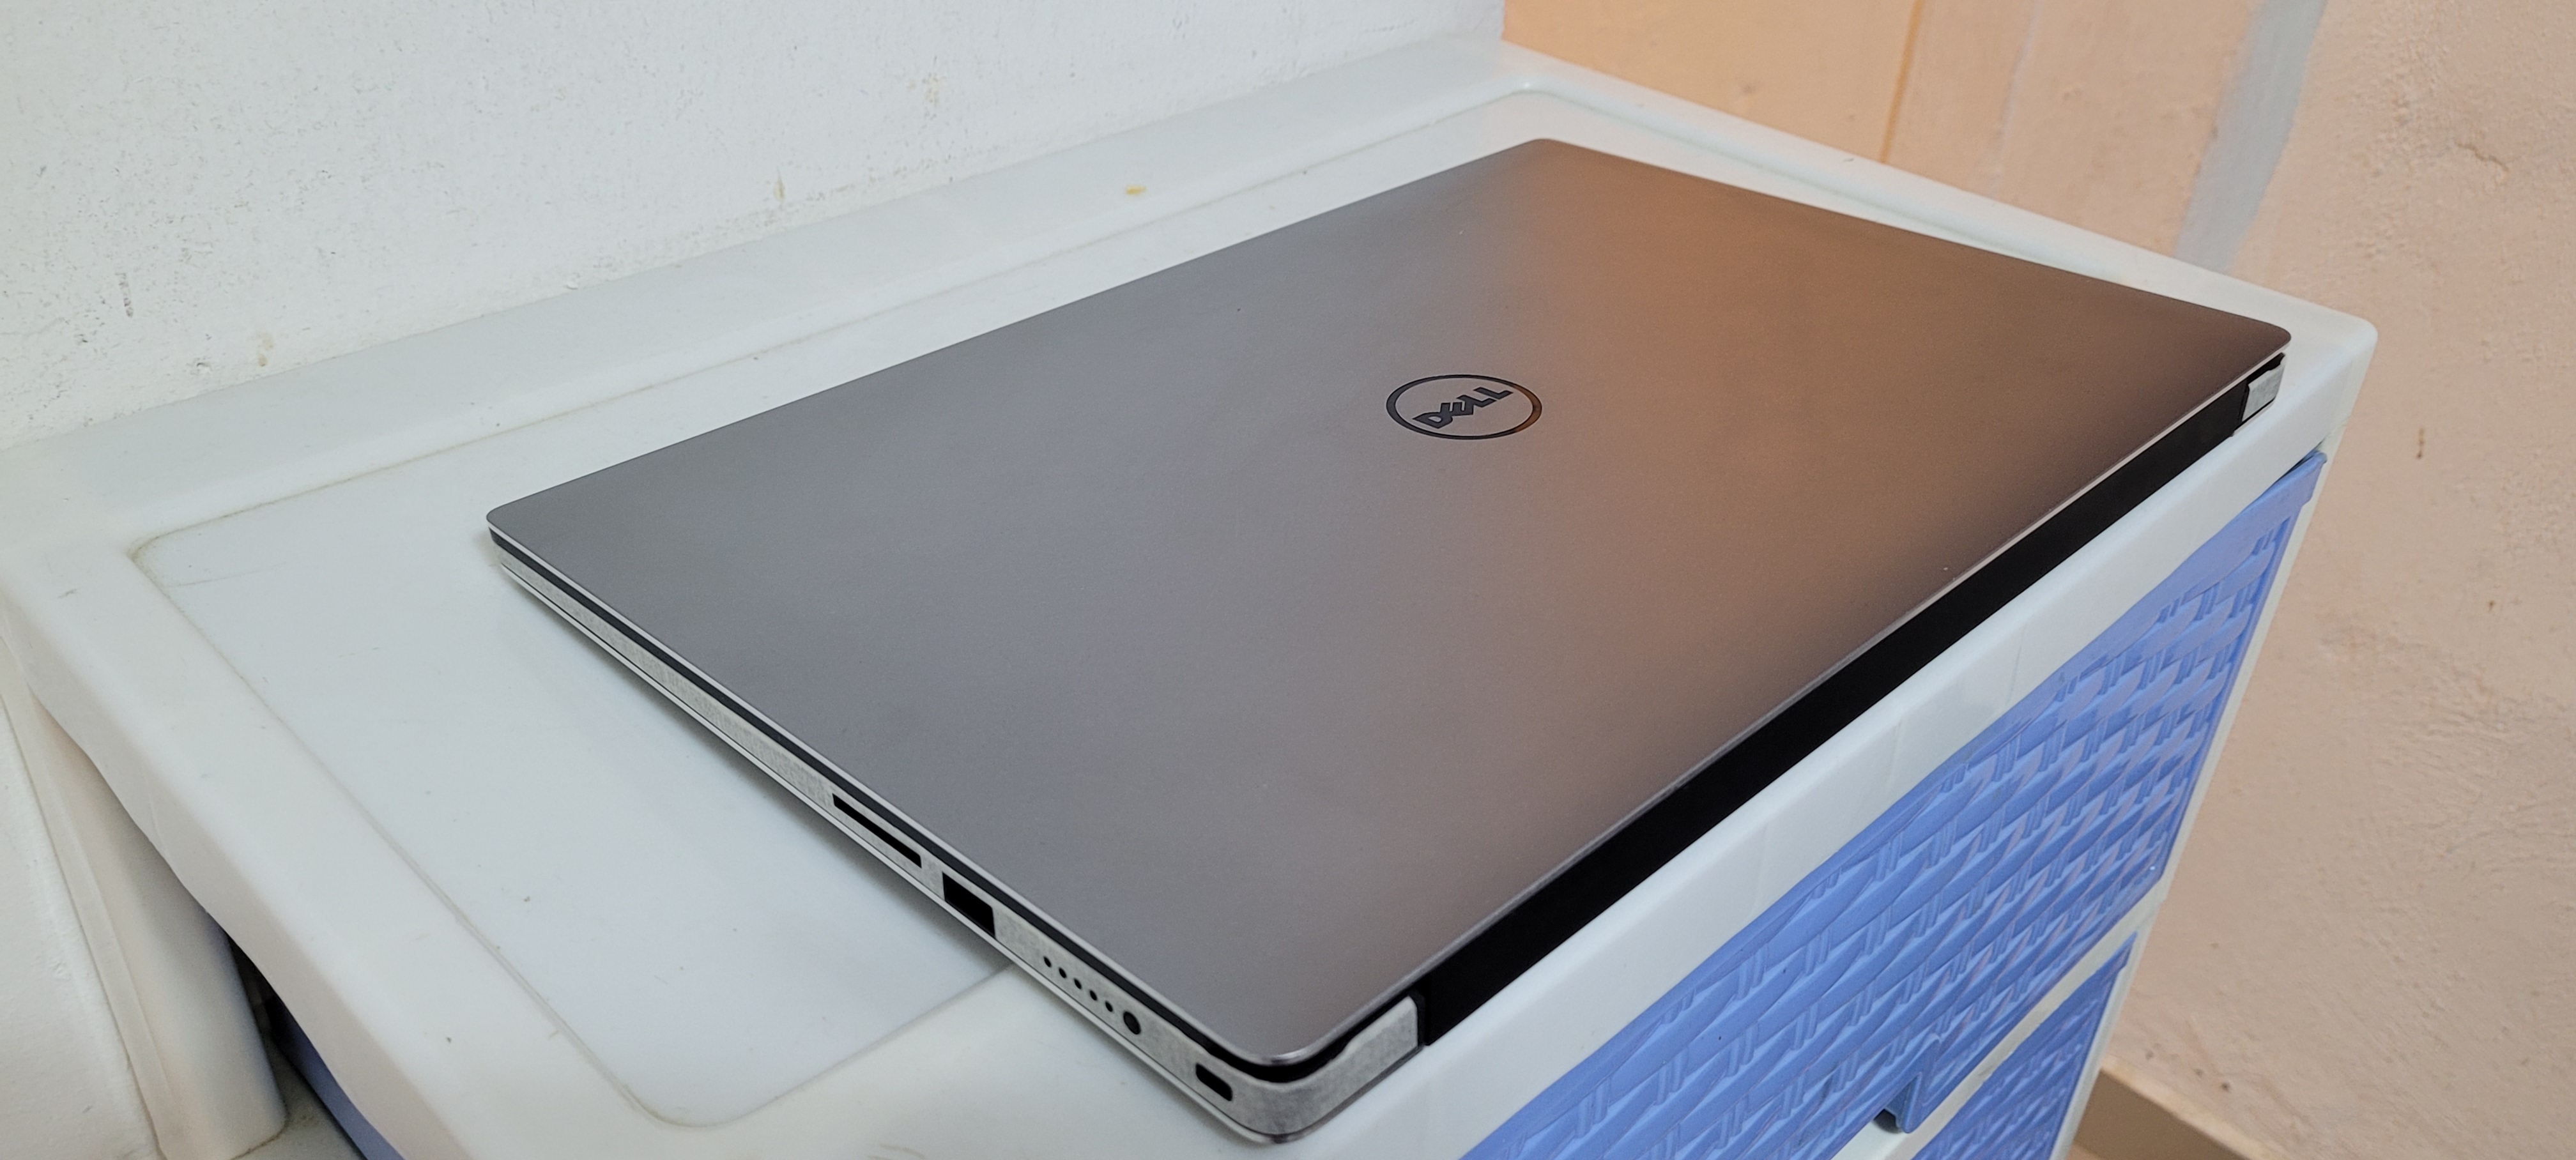 computadoras y laptops - Dell inspiron Touch 15 Pulg Core i7 8va Gen Ram 16gb Disco 512gb ssd Nvidea 10g 3